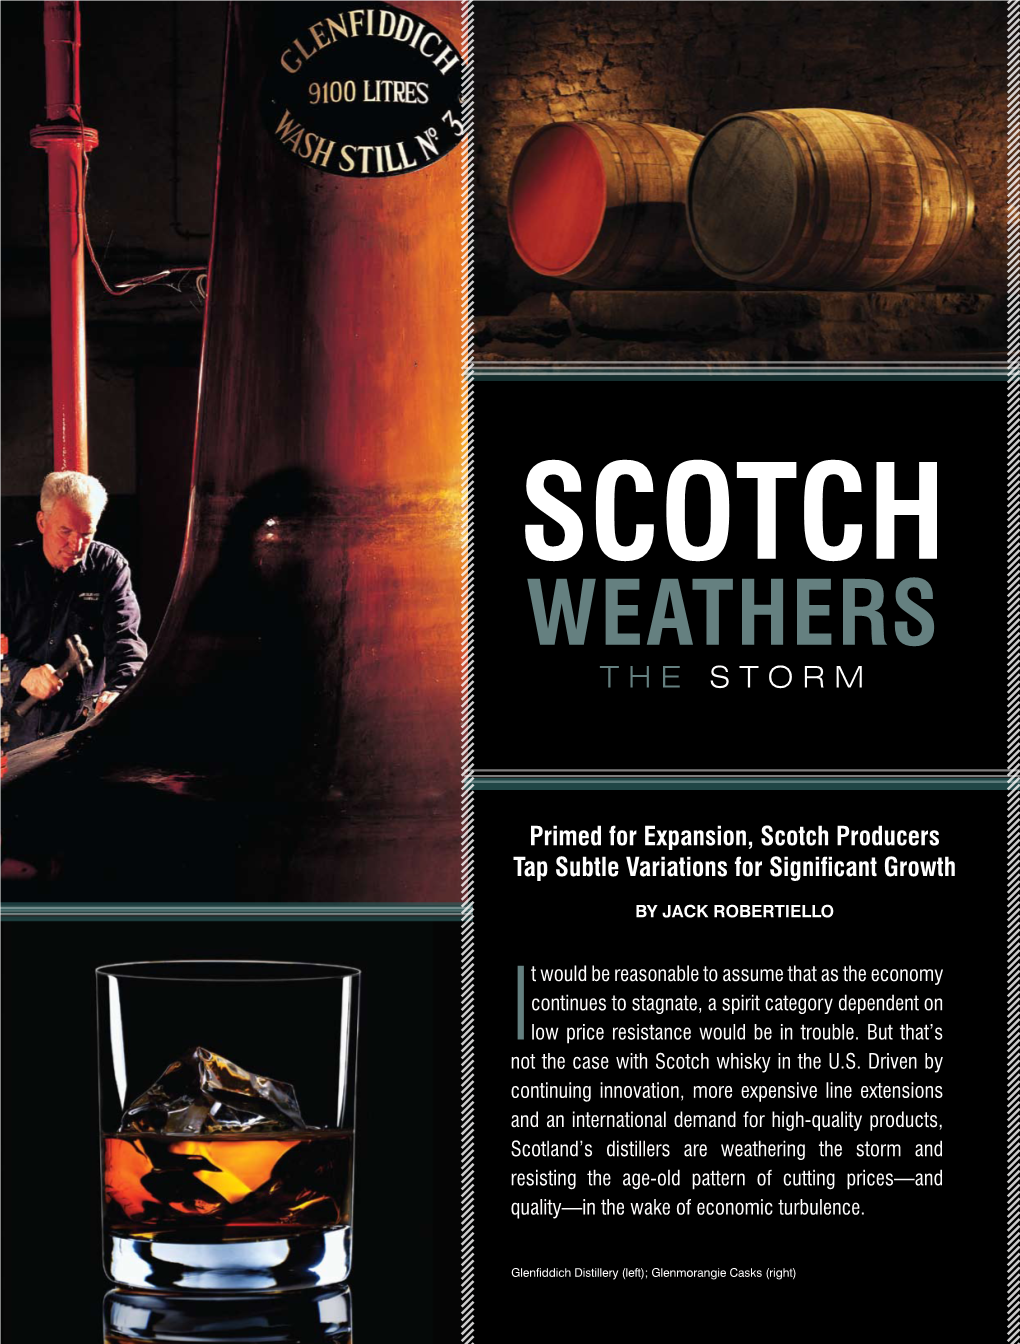 Scotch Weathers the Storm